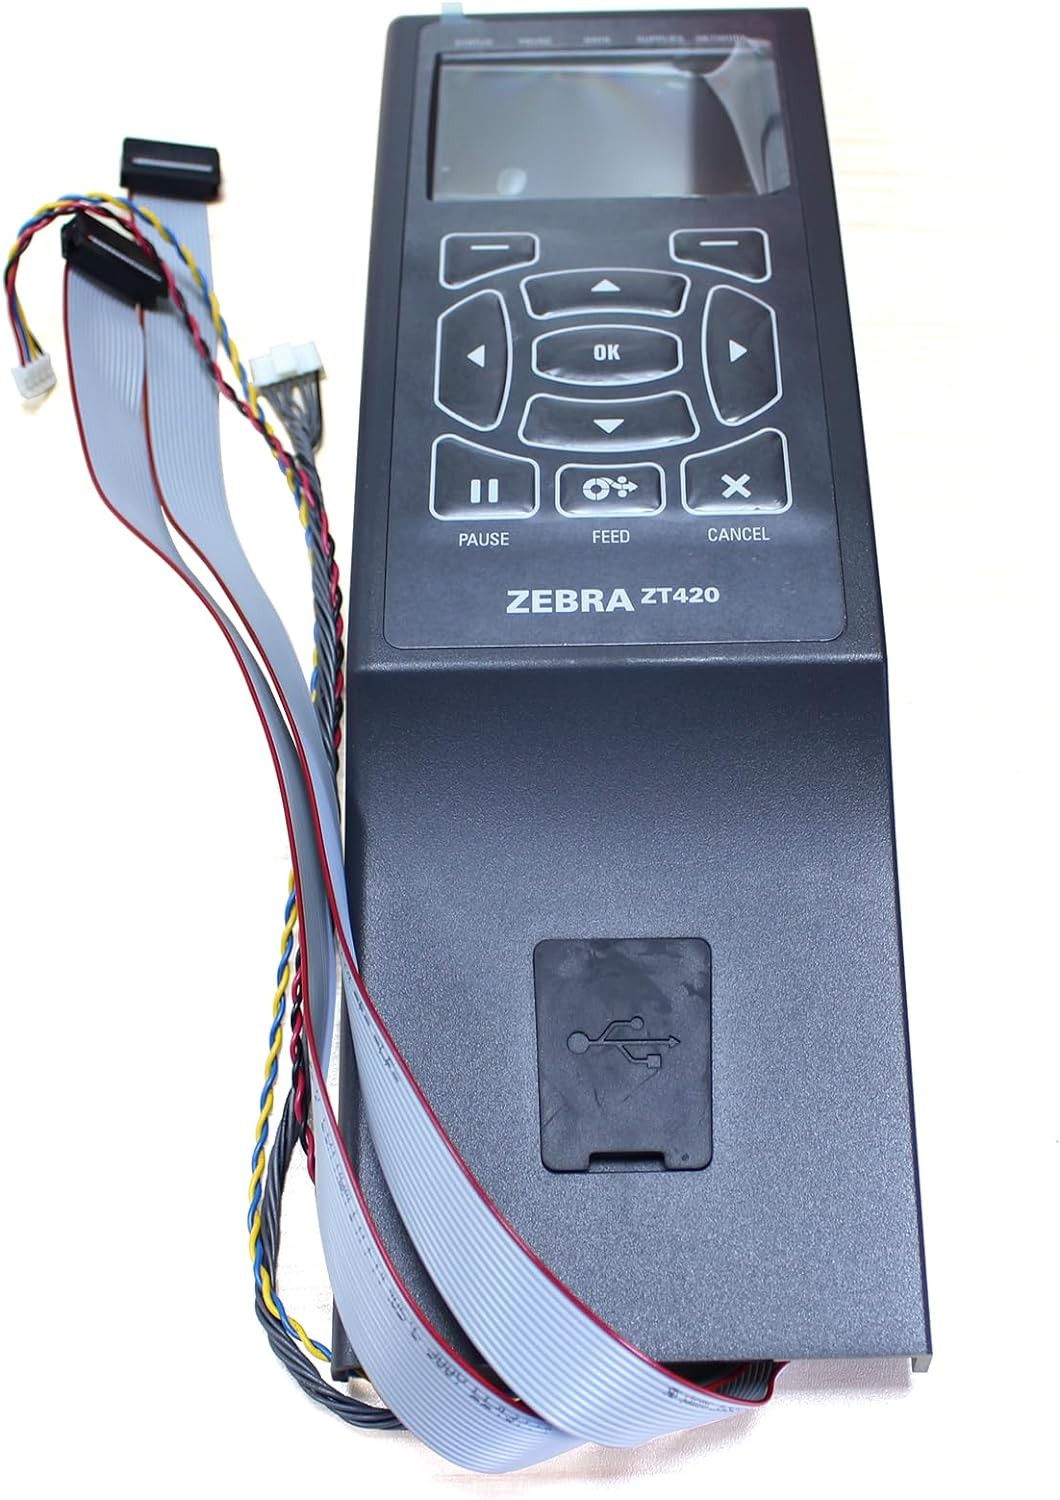 P1058930-041 Control Panel for Zerba ZT420 203dpi 300dpi